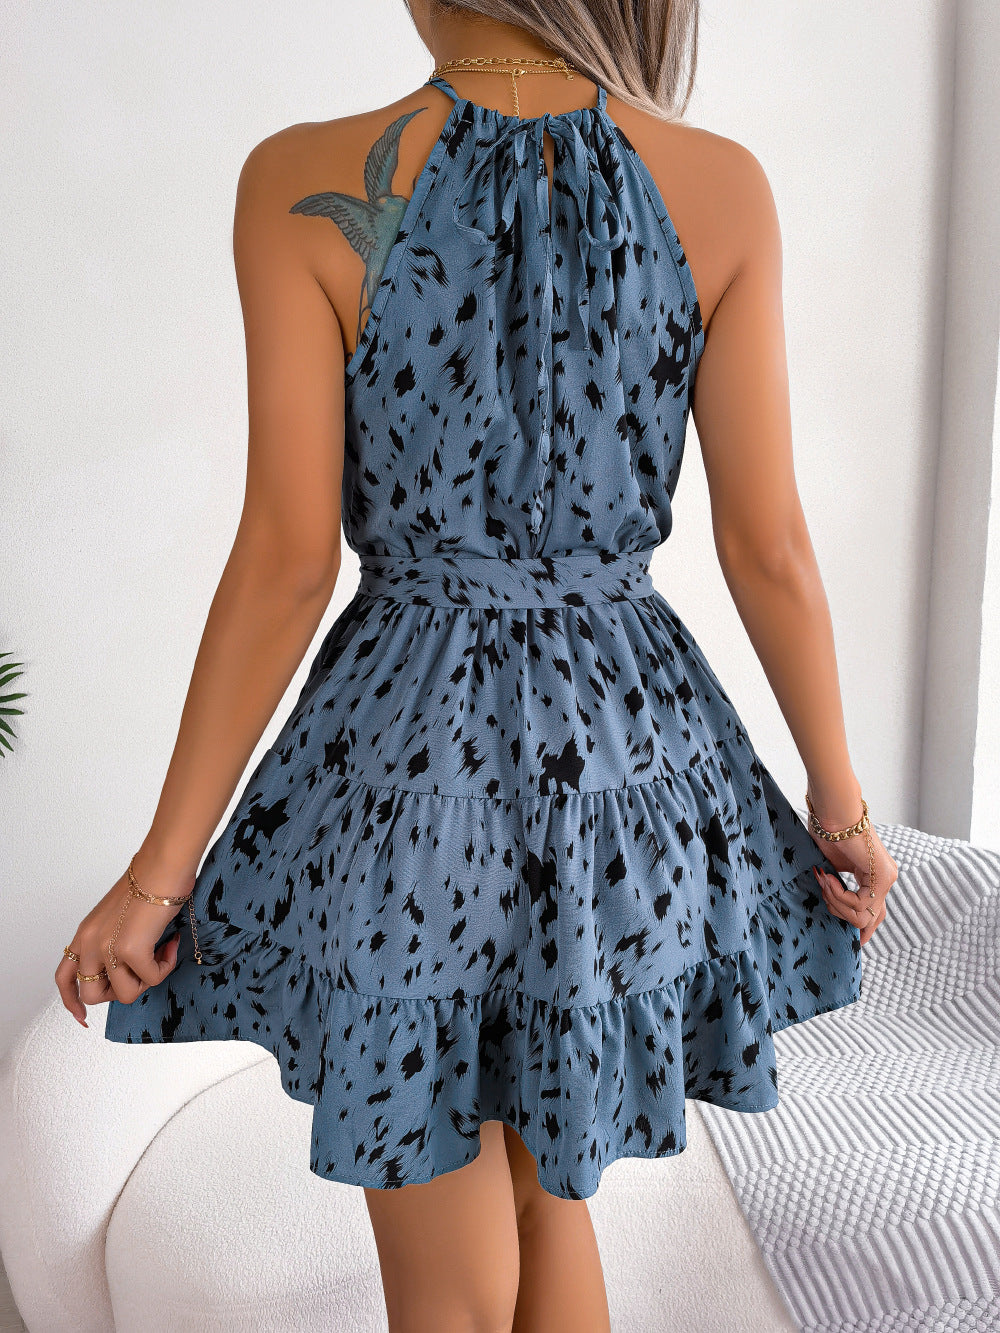 Casual Leopard Print Ruffled Swing Dress Summer Fashion Beach Dresses 